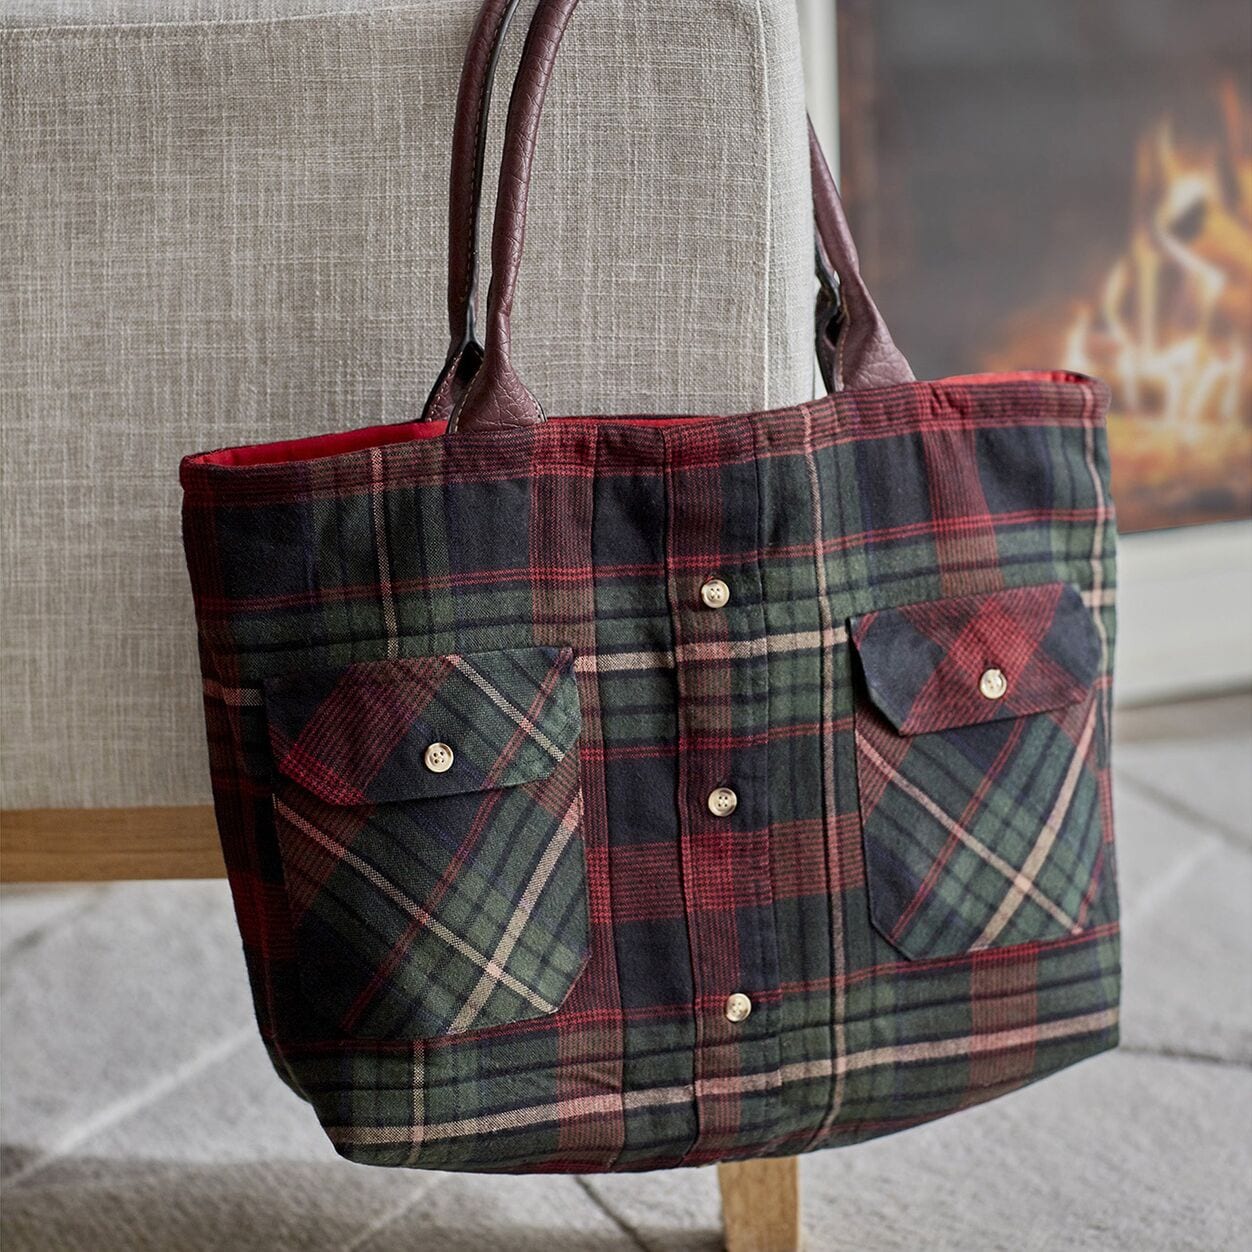 Repurposed Flannel Tote Bag Free Sewing Tutorial | Sewing 4 Free